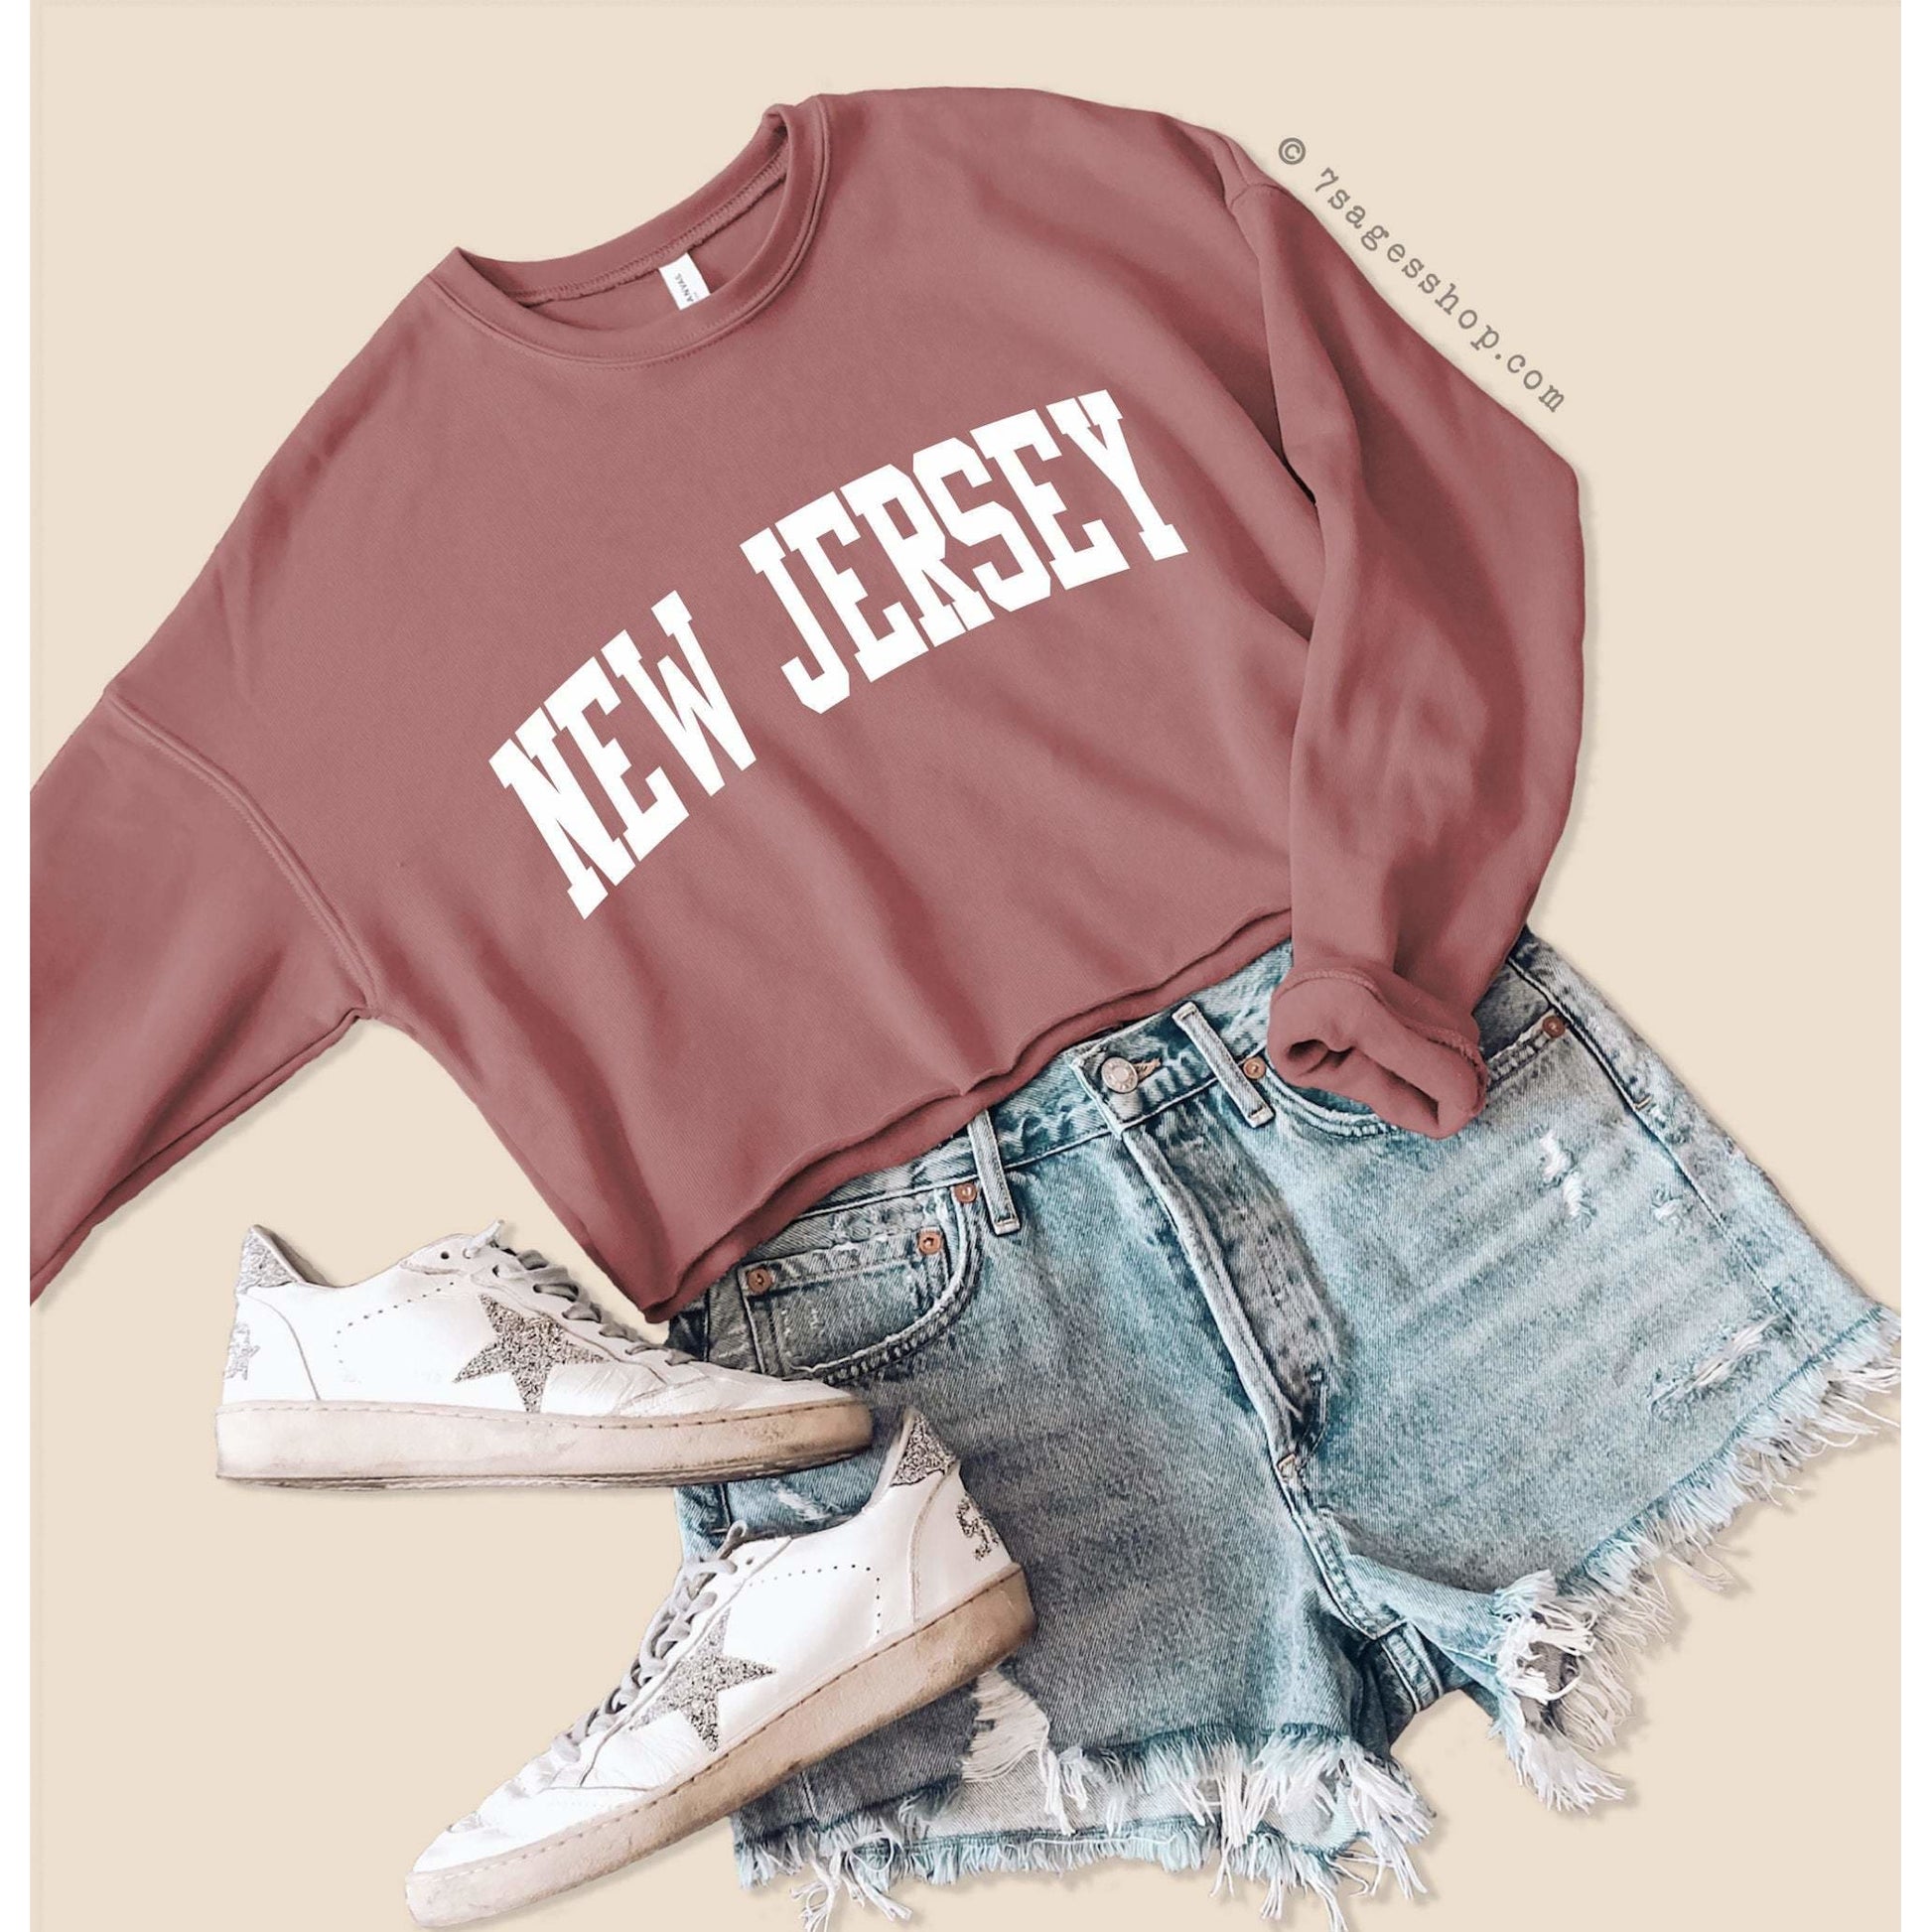 New Jersey Cropped Sweatshirt - New Jersey Sweatshirt - New Jersey Shirts - University of New Jersey Crop Top - Fleece Sweatshirt